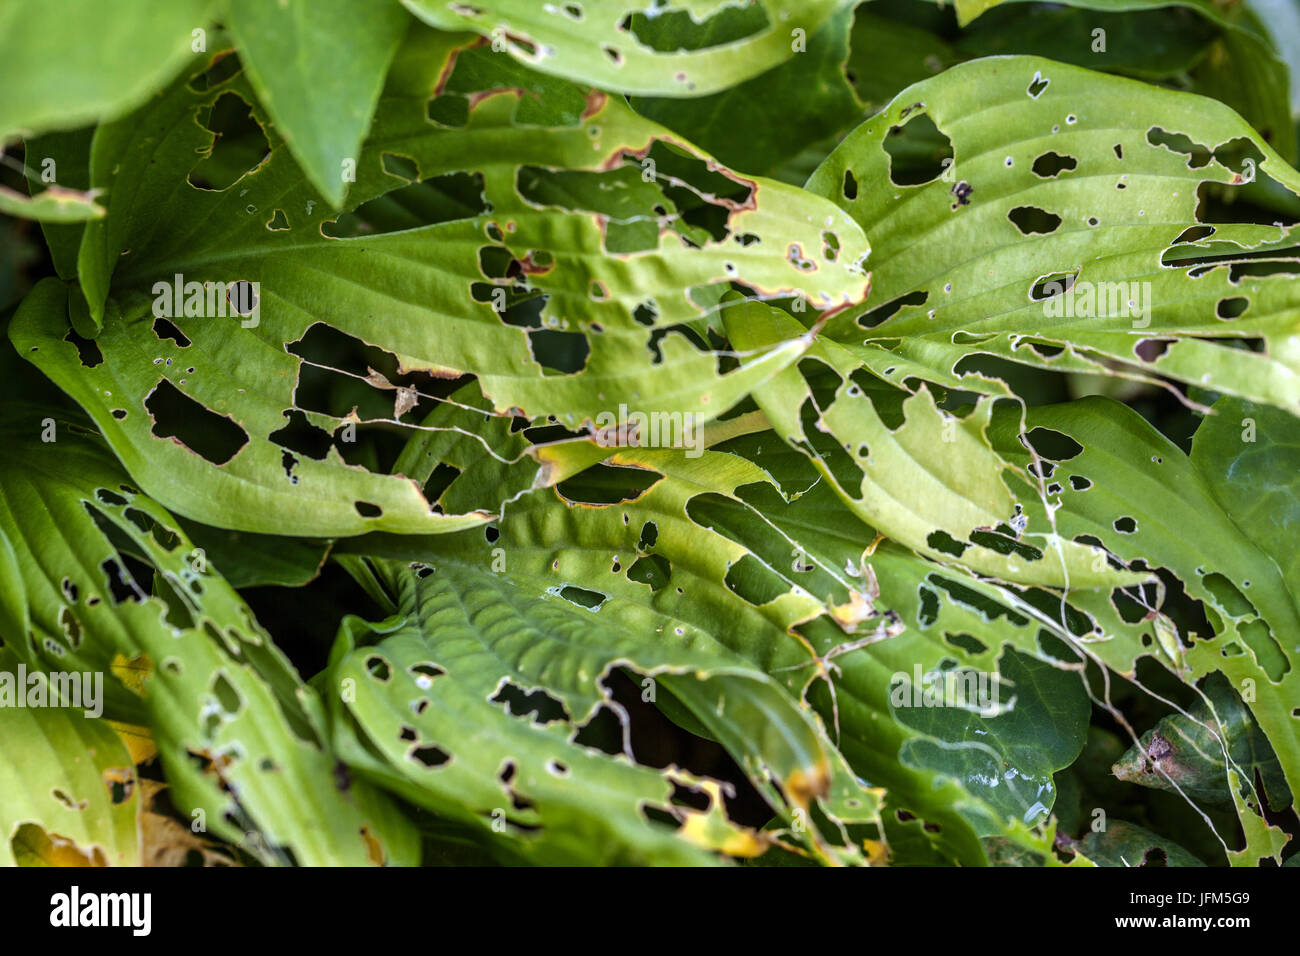 Hosta leaves damaged by snails or slugs, garden pests Stock Photo